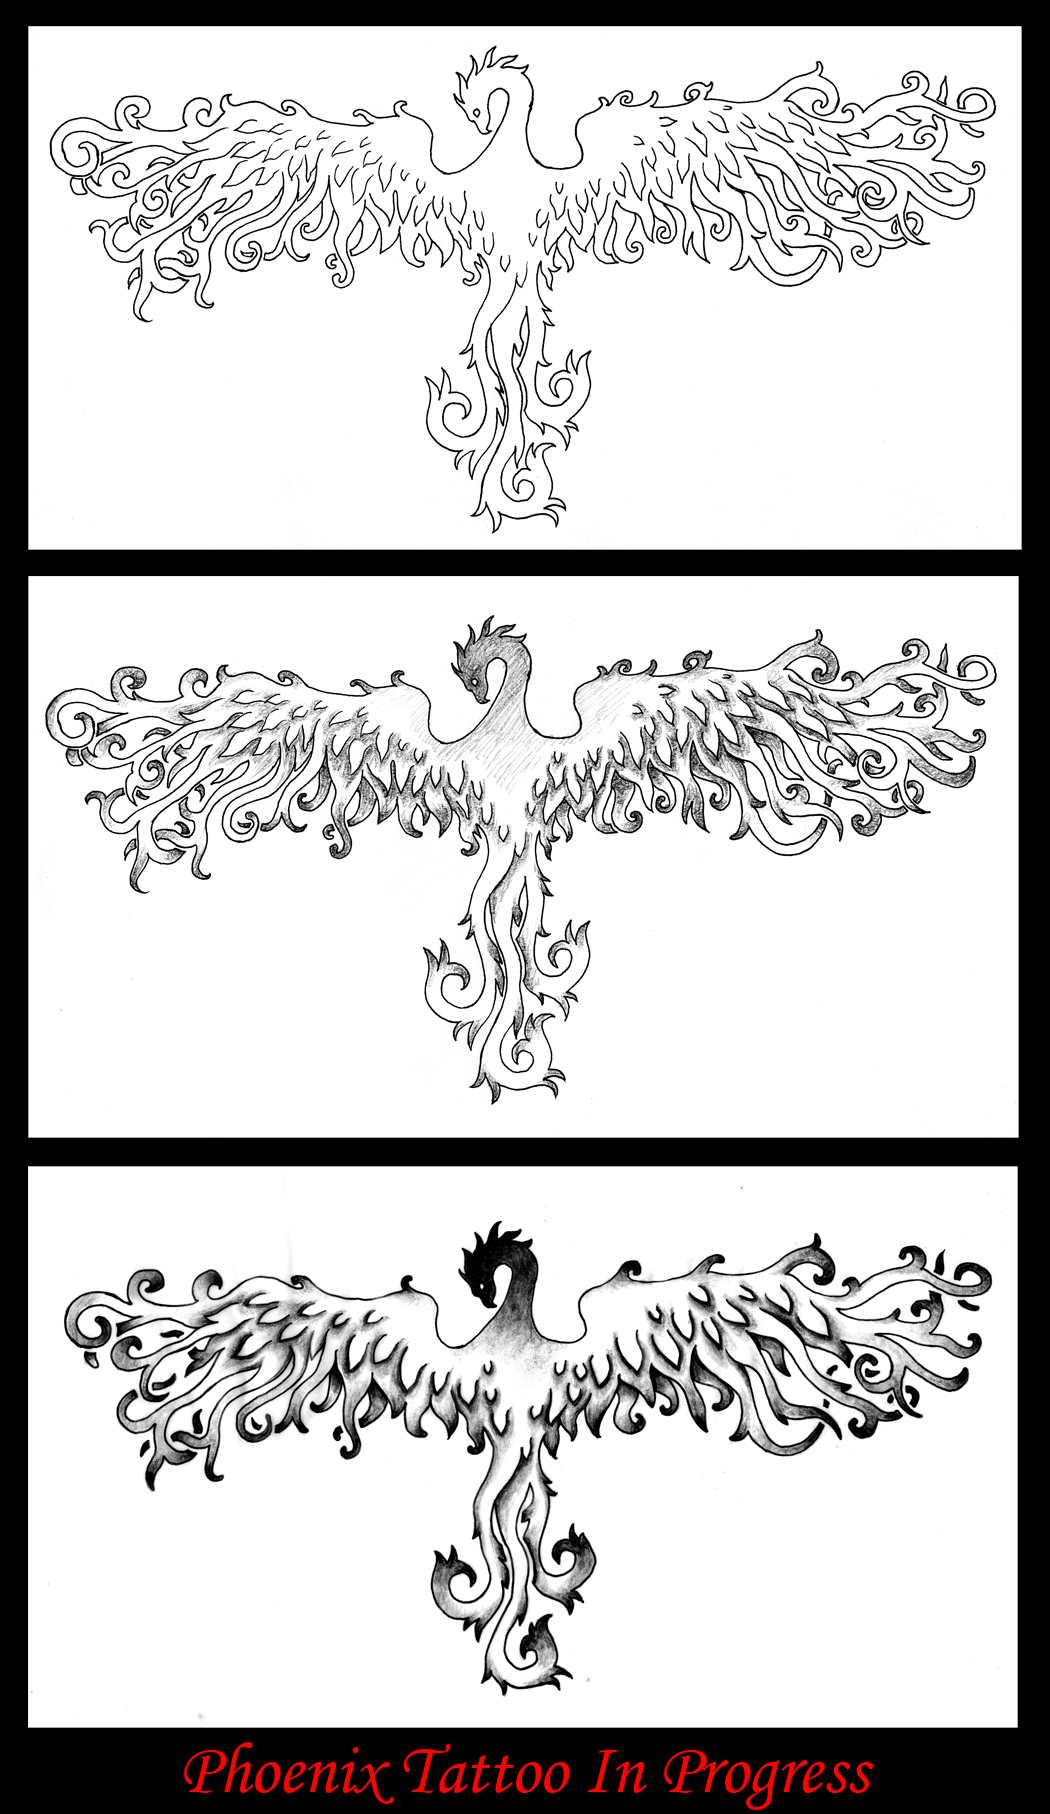 Phoenix Tattoo by AeternusSpero on deviantART